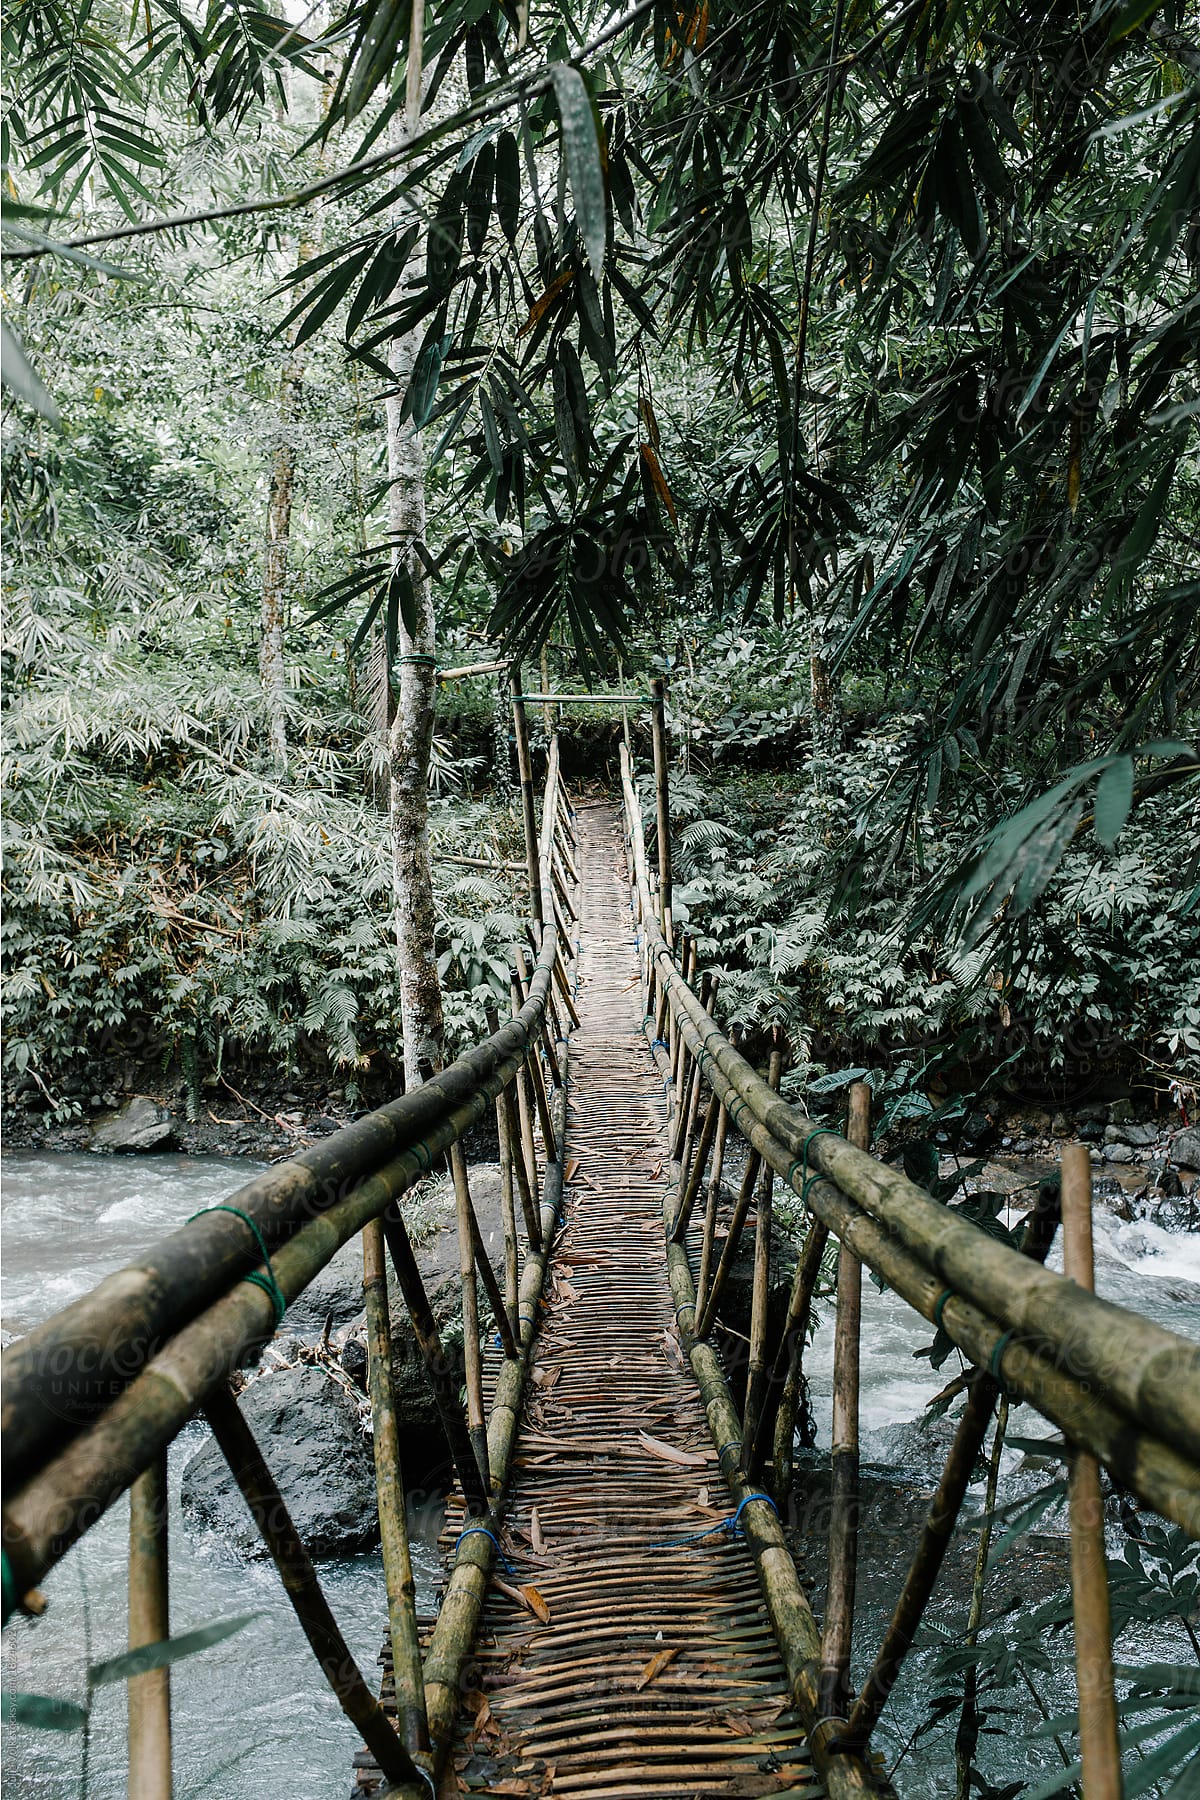 Suspension Bridge In The Jungle by Stocksy Contributor Julia Volk -  Stocksy